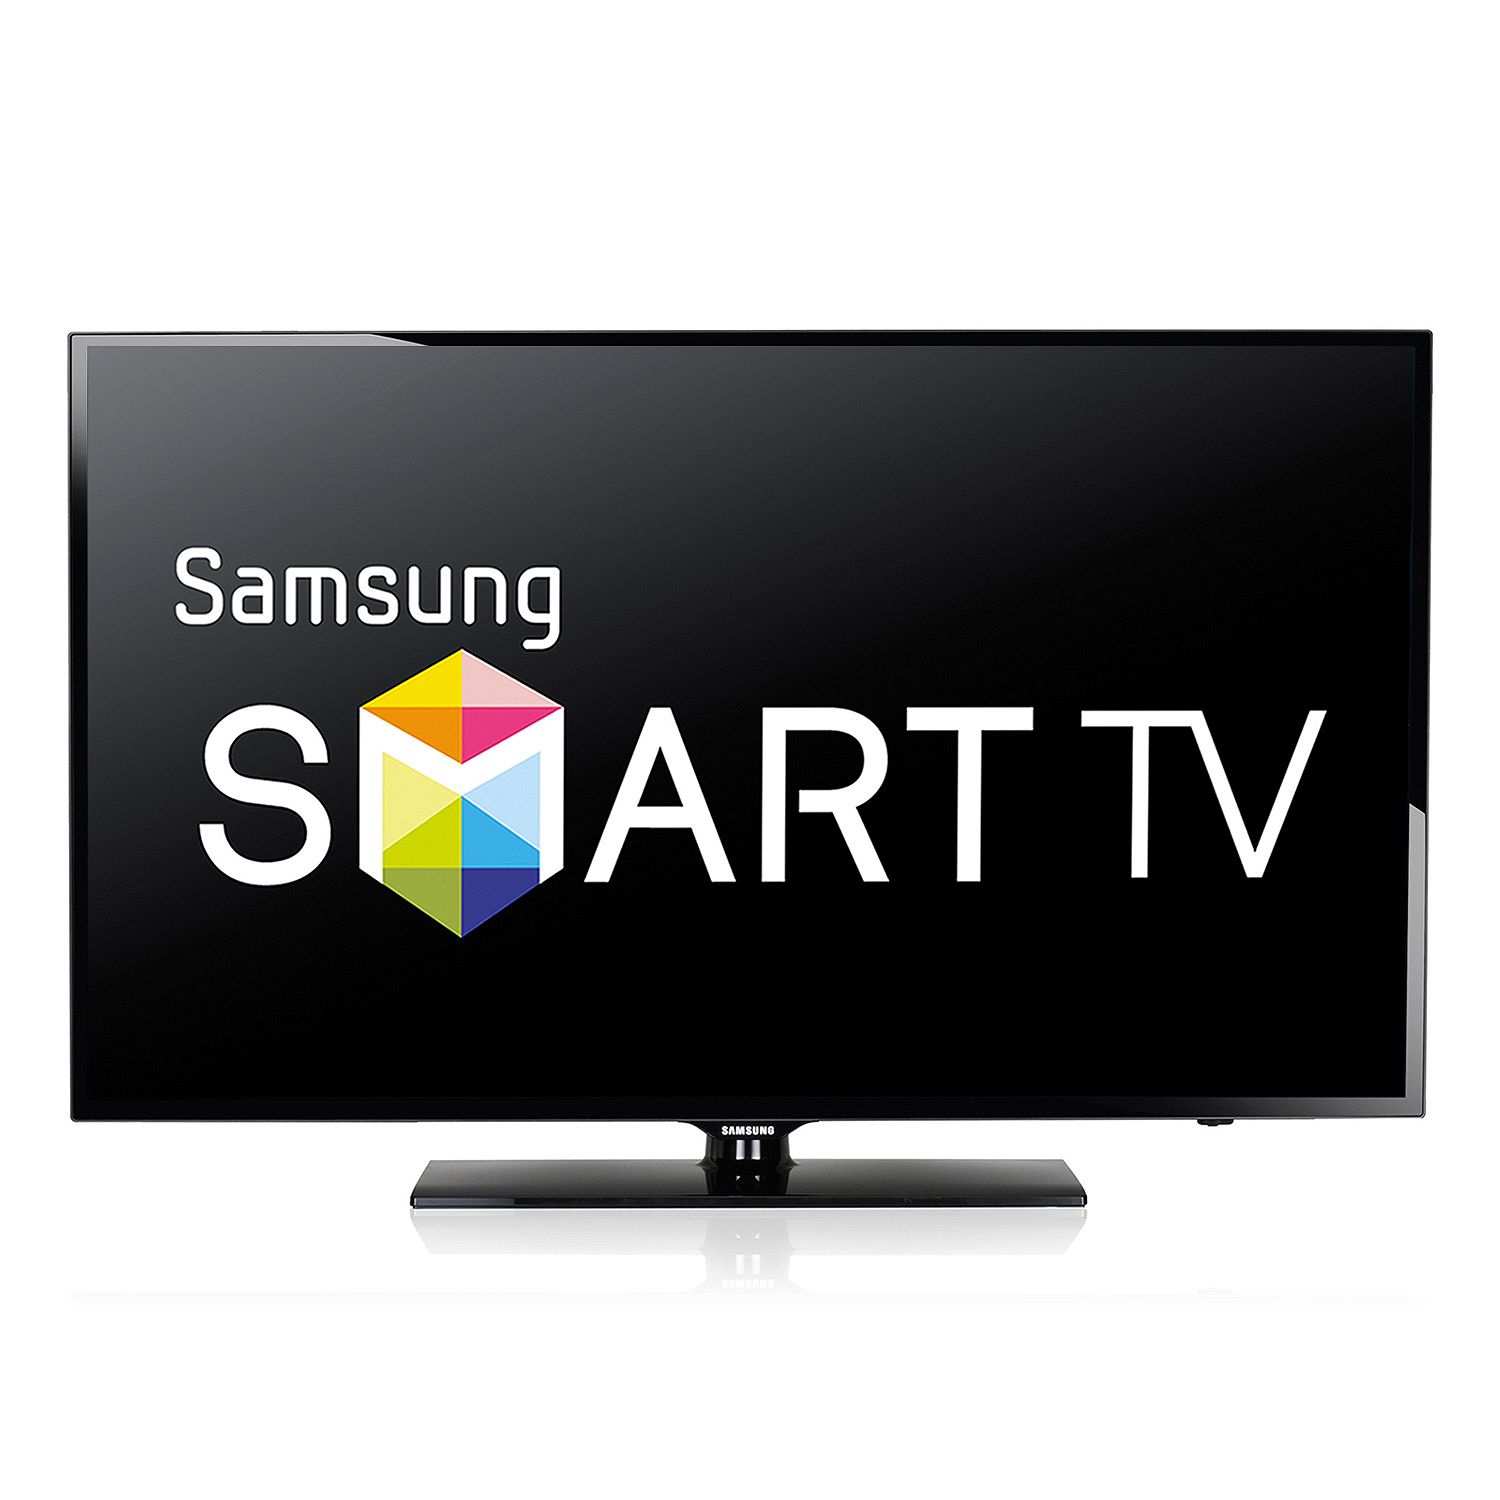 Смарт телевизор купить воронеж. Смарт ТВ Samsung. Телевизор Samsung Smart TV. Самсунг смарт ТВ 32. Led телевизор Samsung смарт.